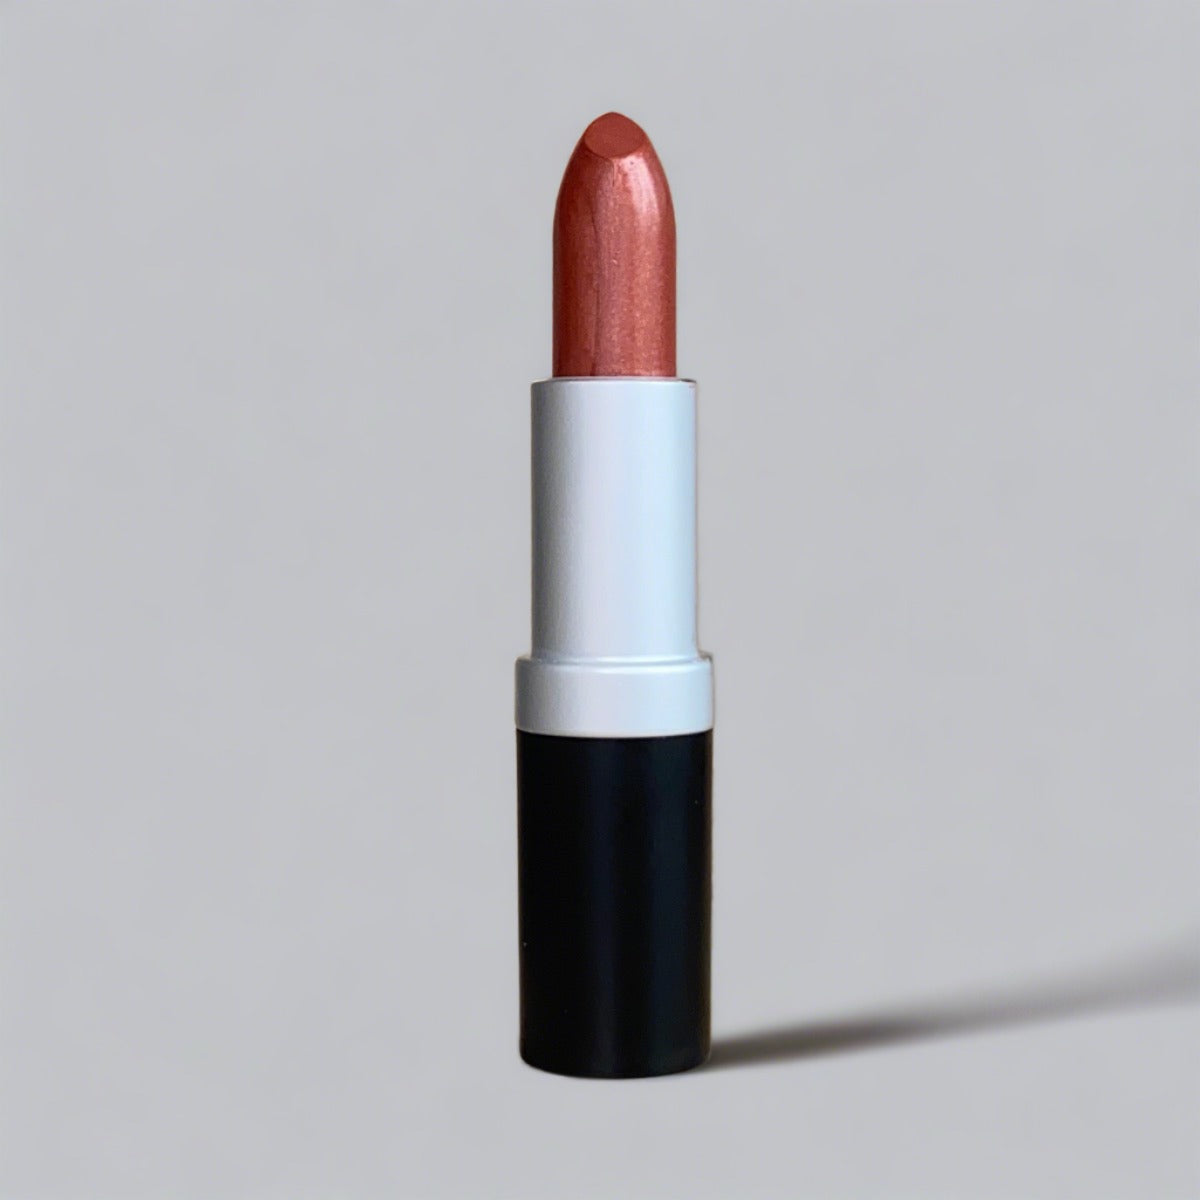 Warm spice colored copper lipstick with hydration